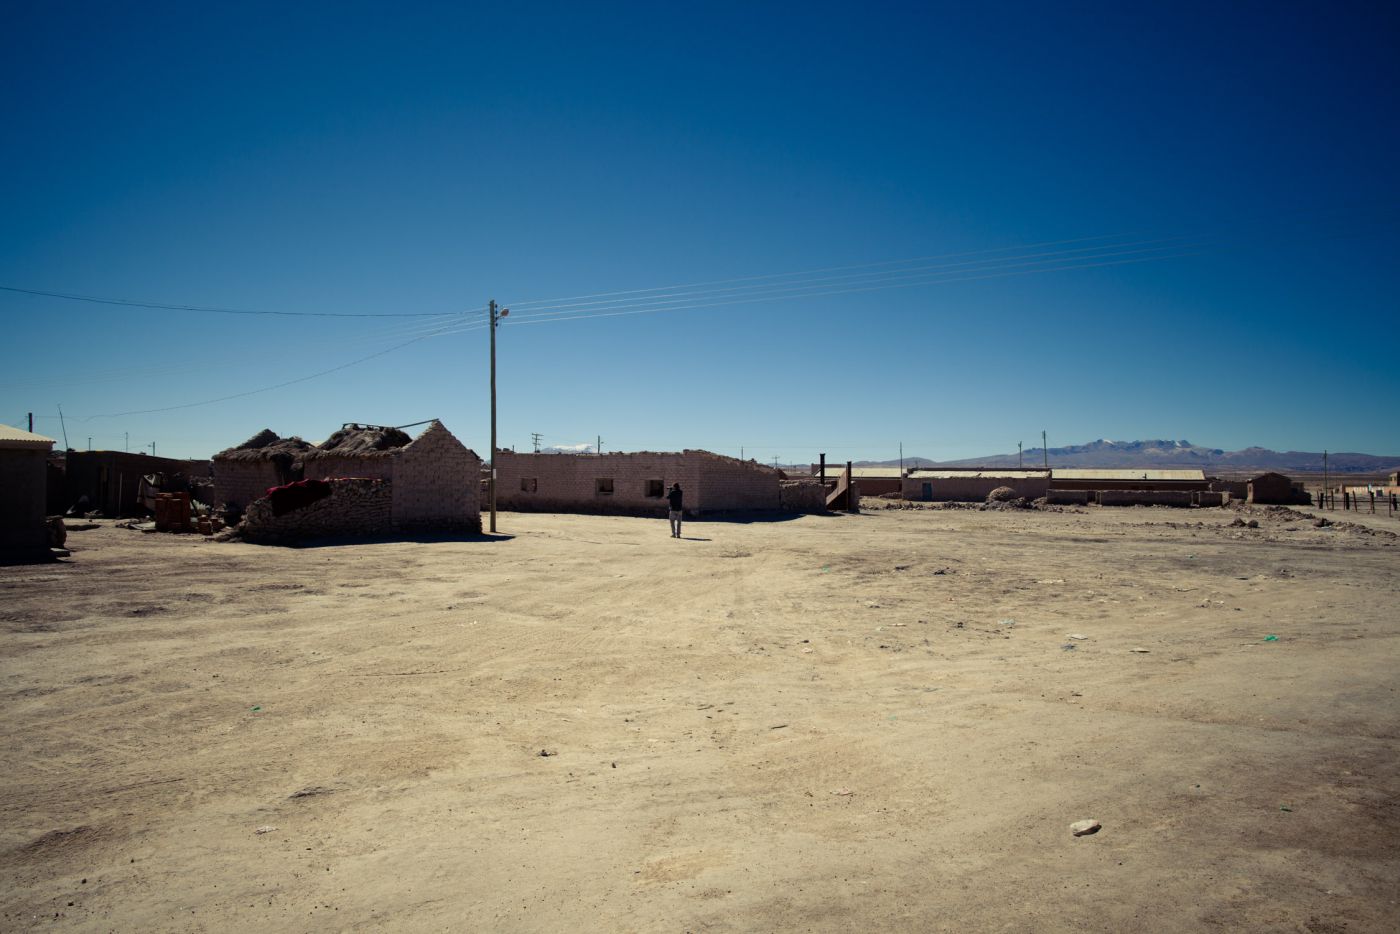 Colchani, touristic village of salt industry, Bolivia